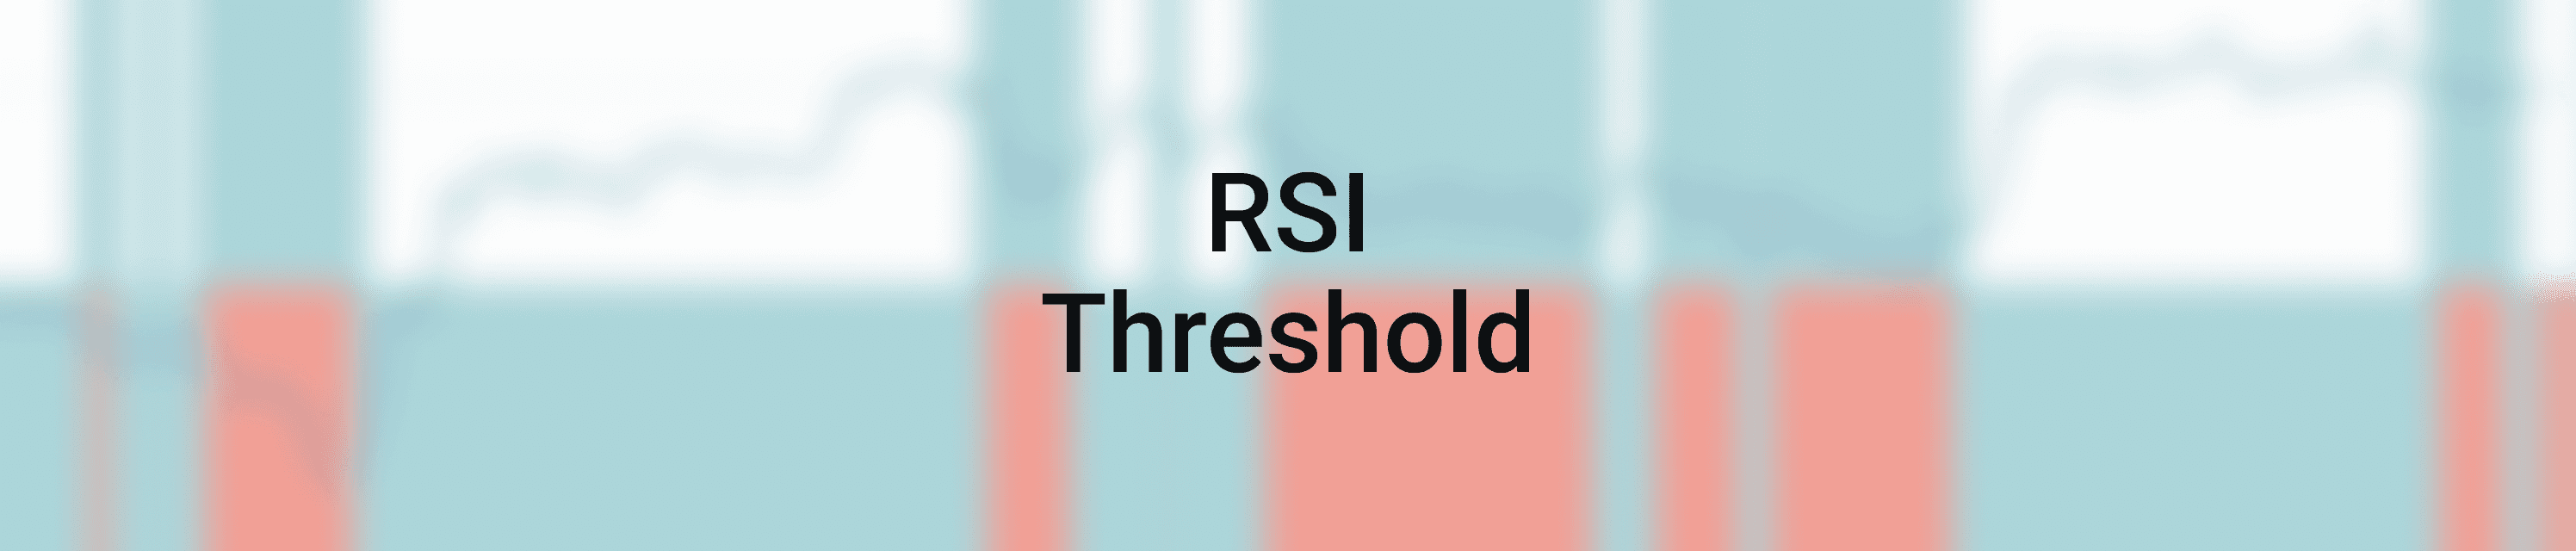 RSI Threshold